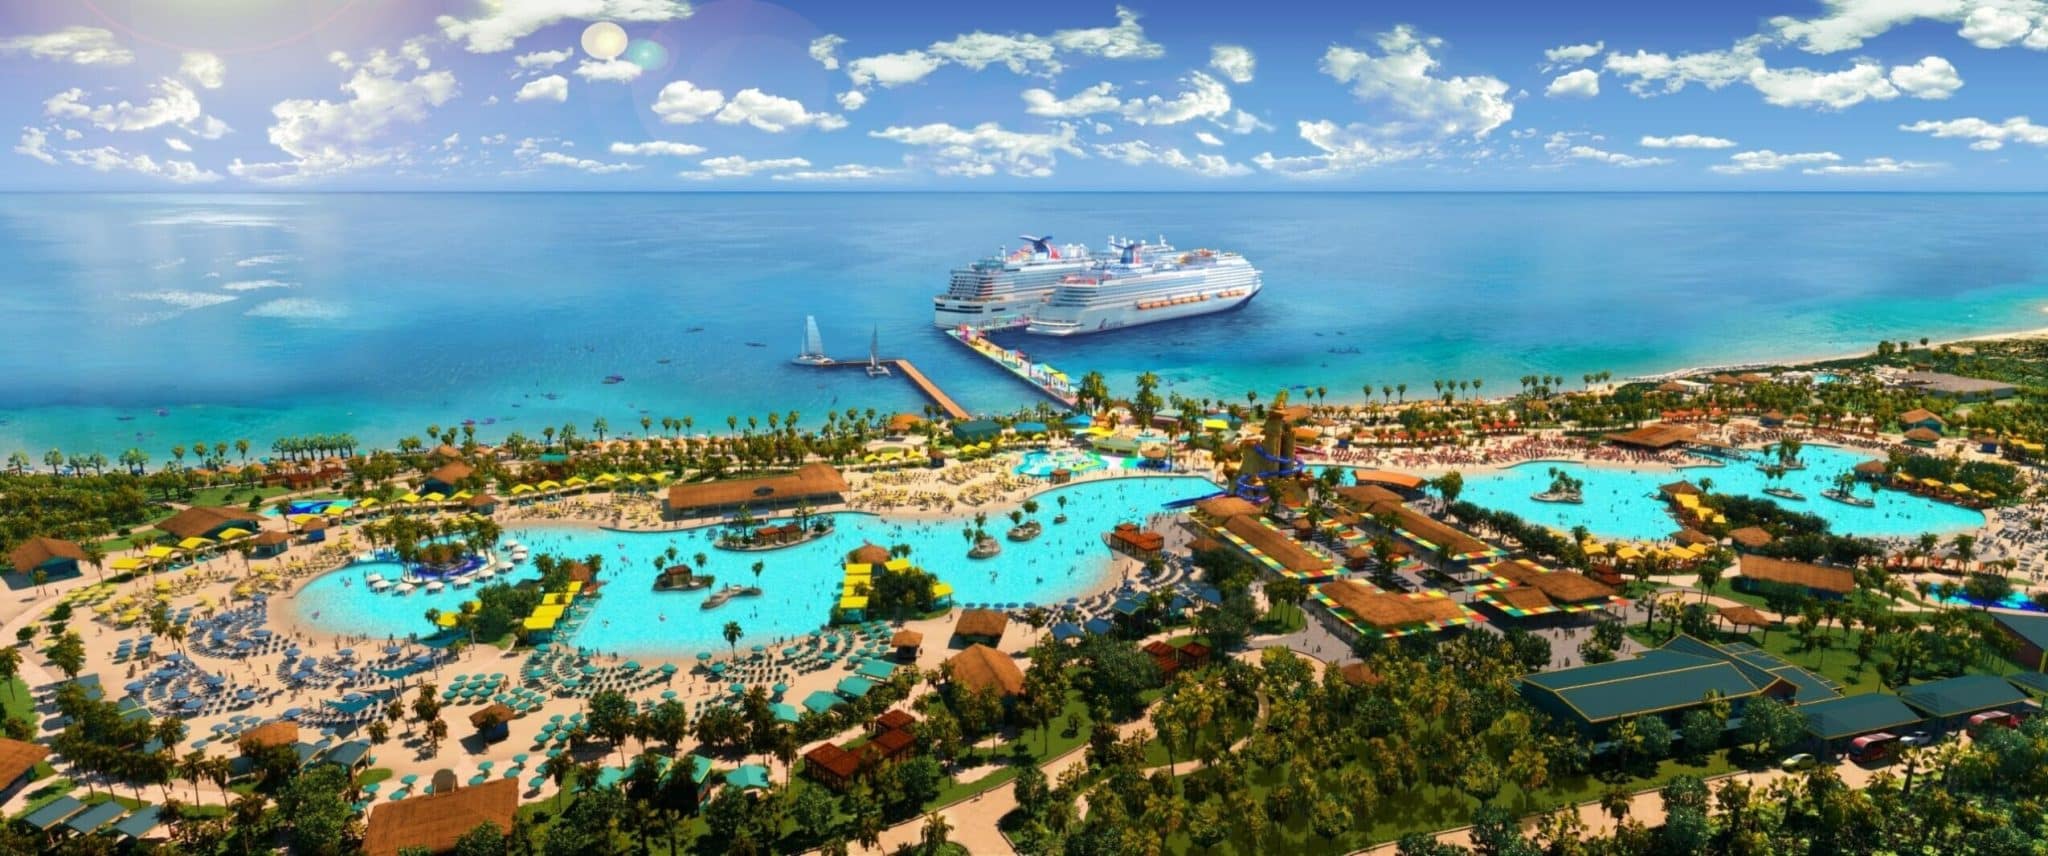 Carnival Cruise Line's new private island destination, Celebration Key